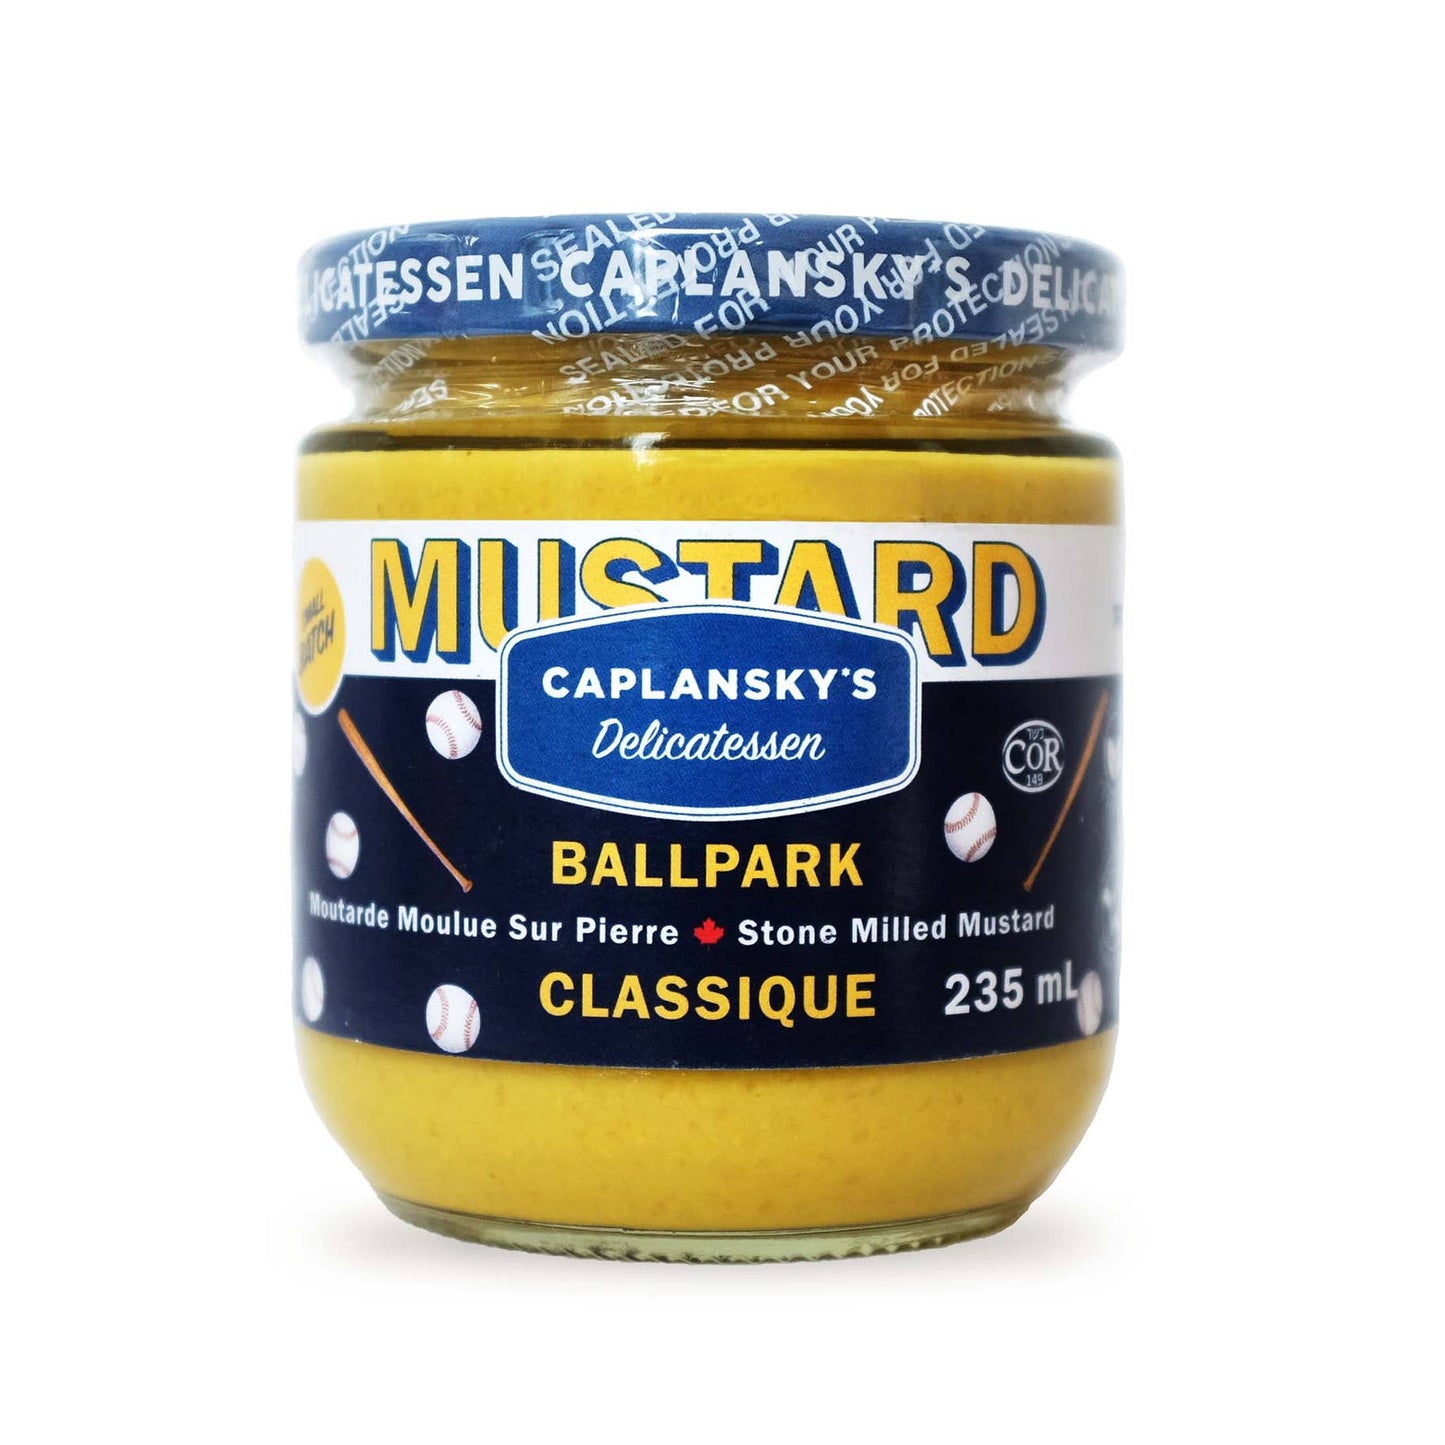 Caplansky's Deli Ballpark Mustard 235 ml - 8 oz. jar